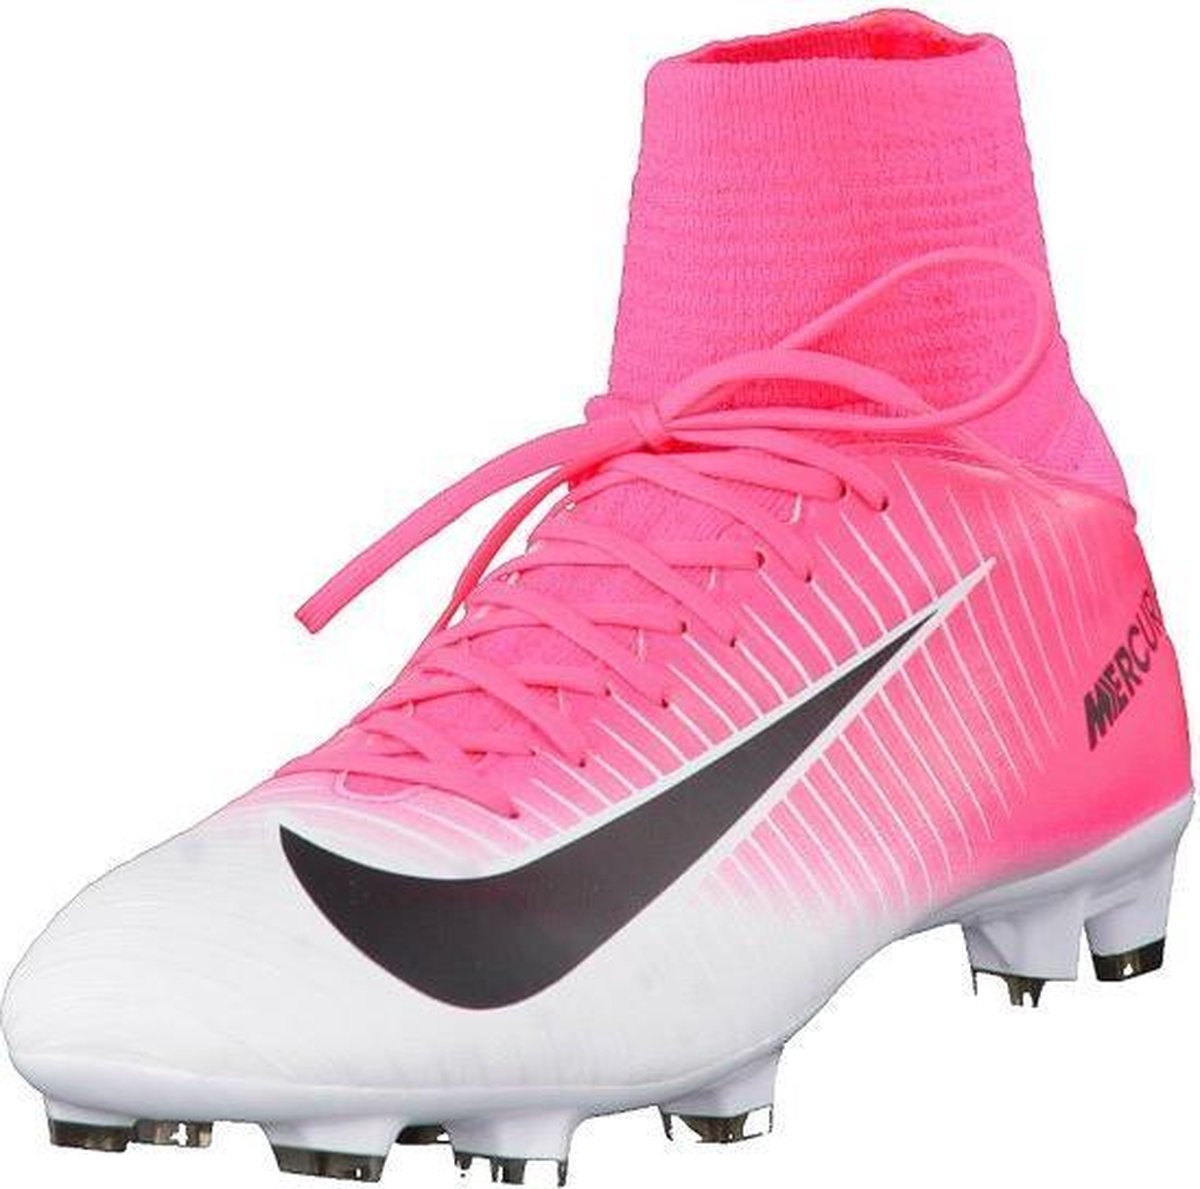 stortbui motor veelbelovend Nike Mercurial Superfly V - voetbalschoenen - roze/wit - maat 38,5 | bol.com